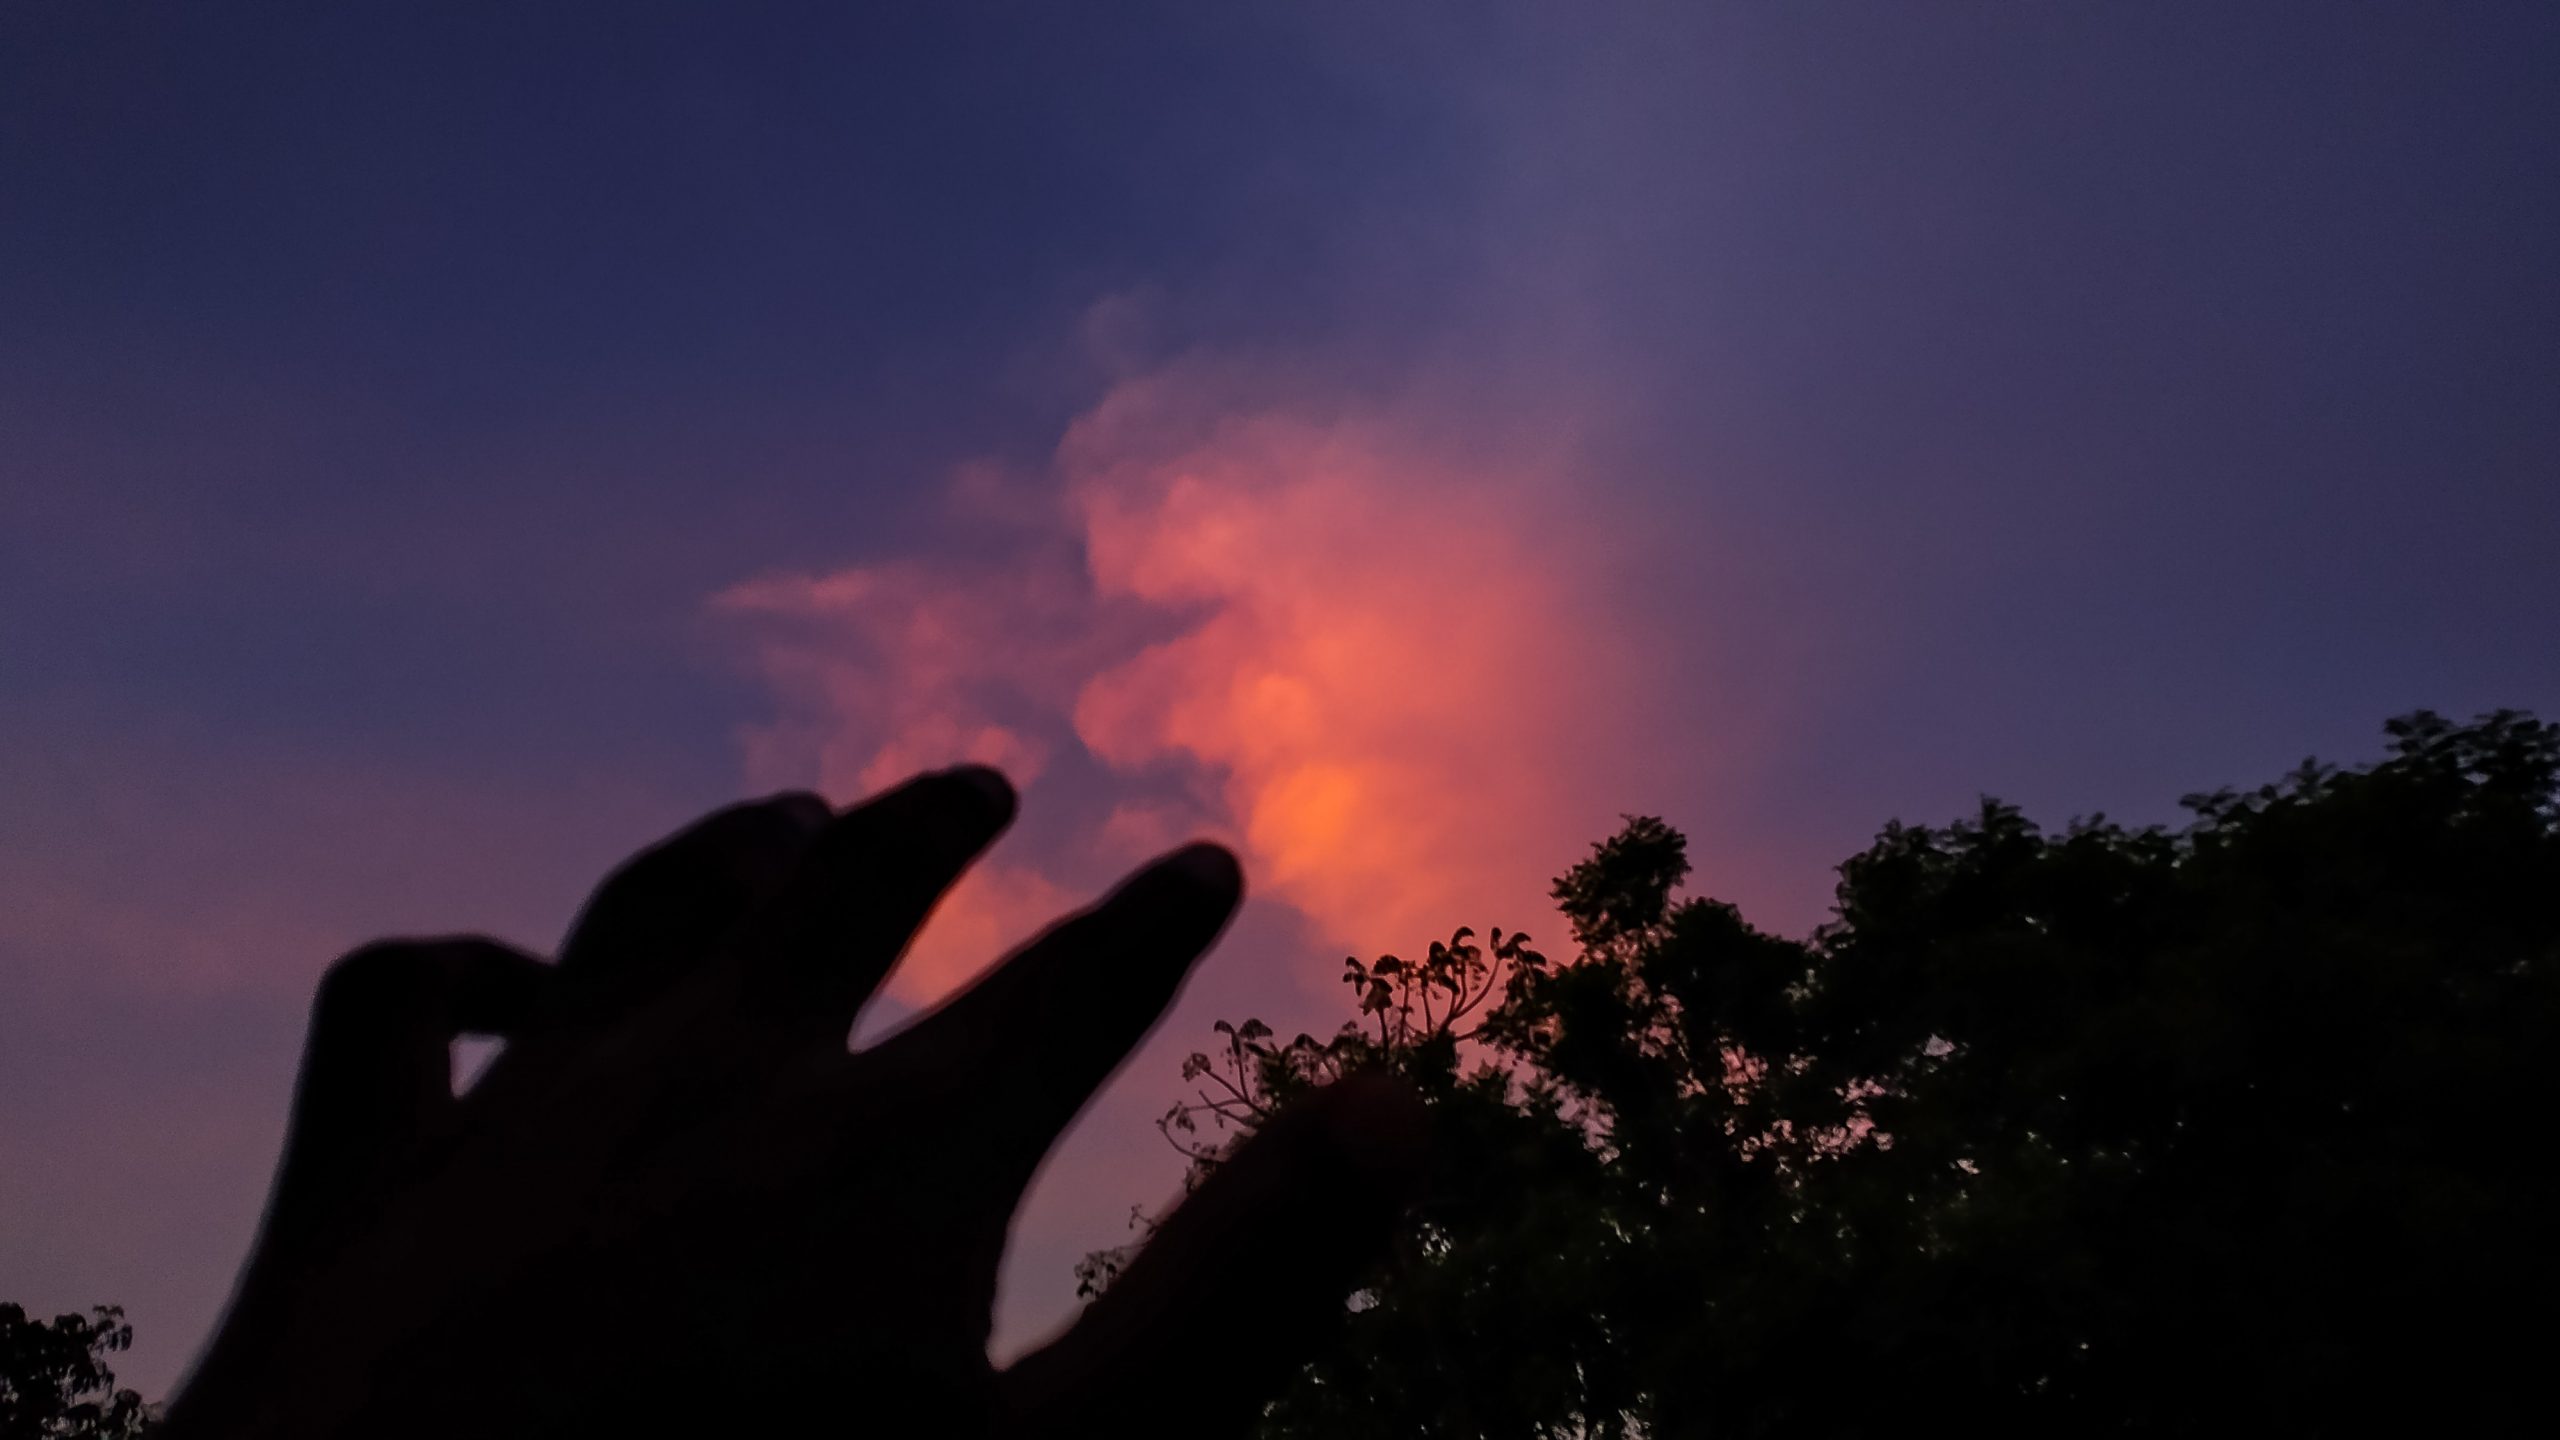 Sky portrait during sunset